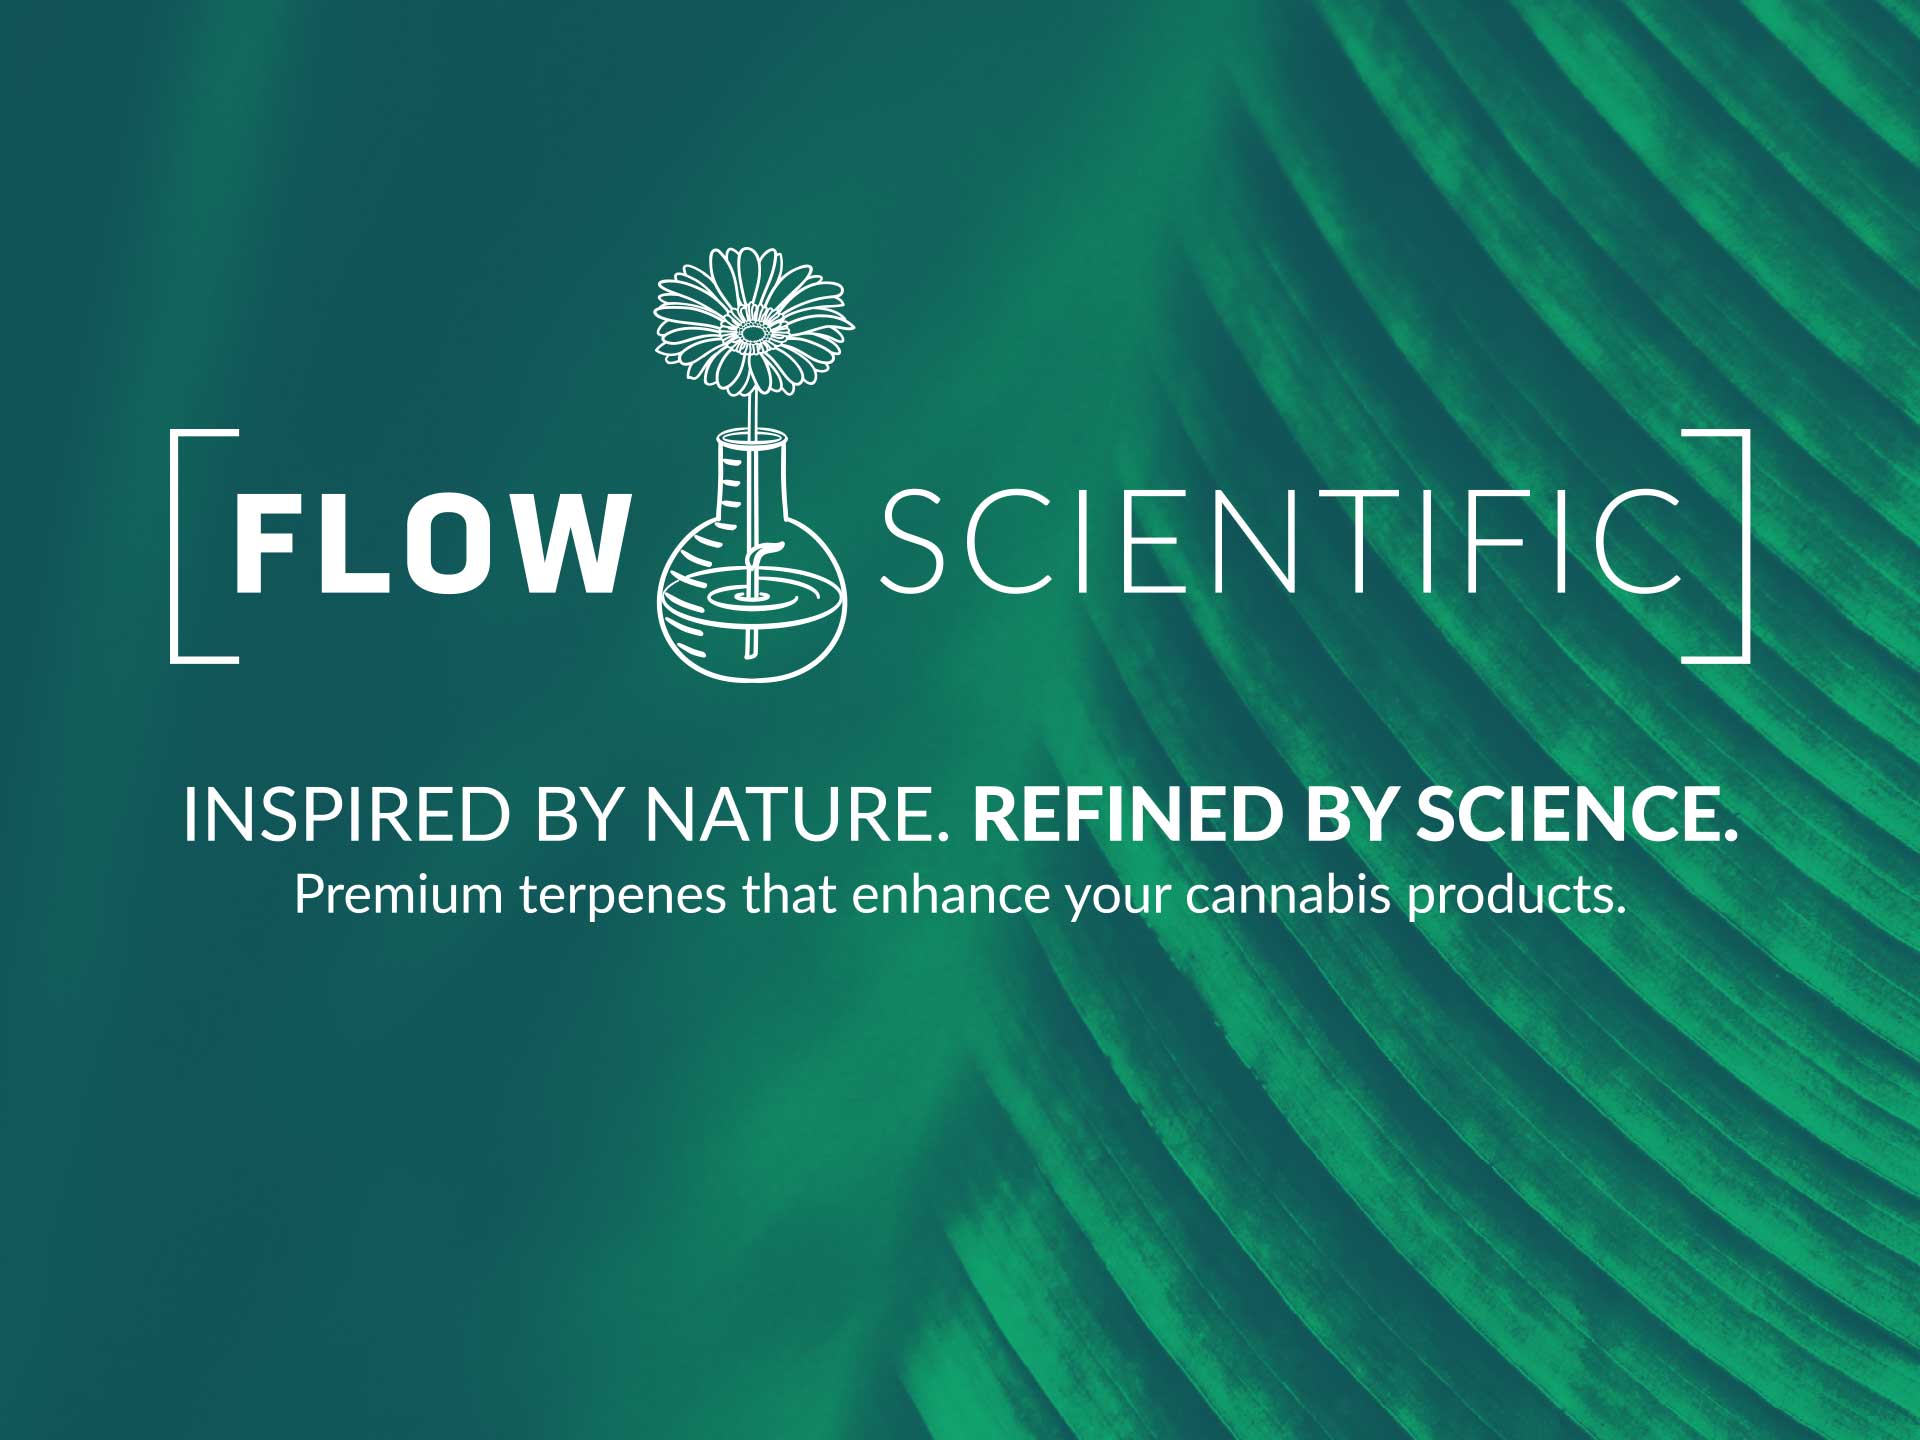 Flow Scientific Booth backdrop design - White Canvas Design